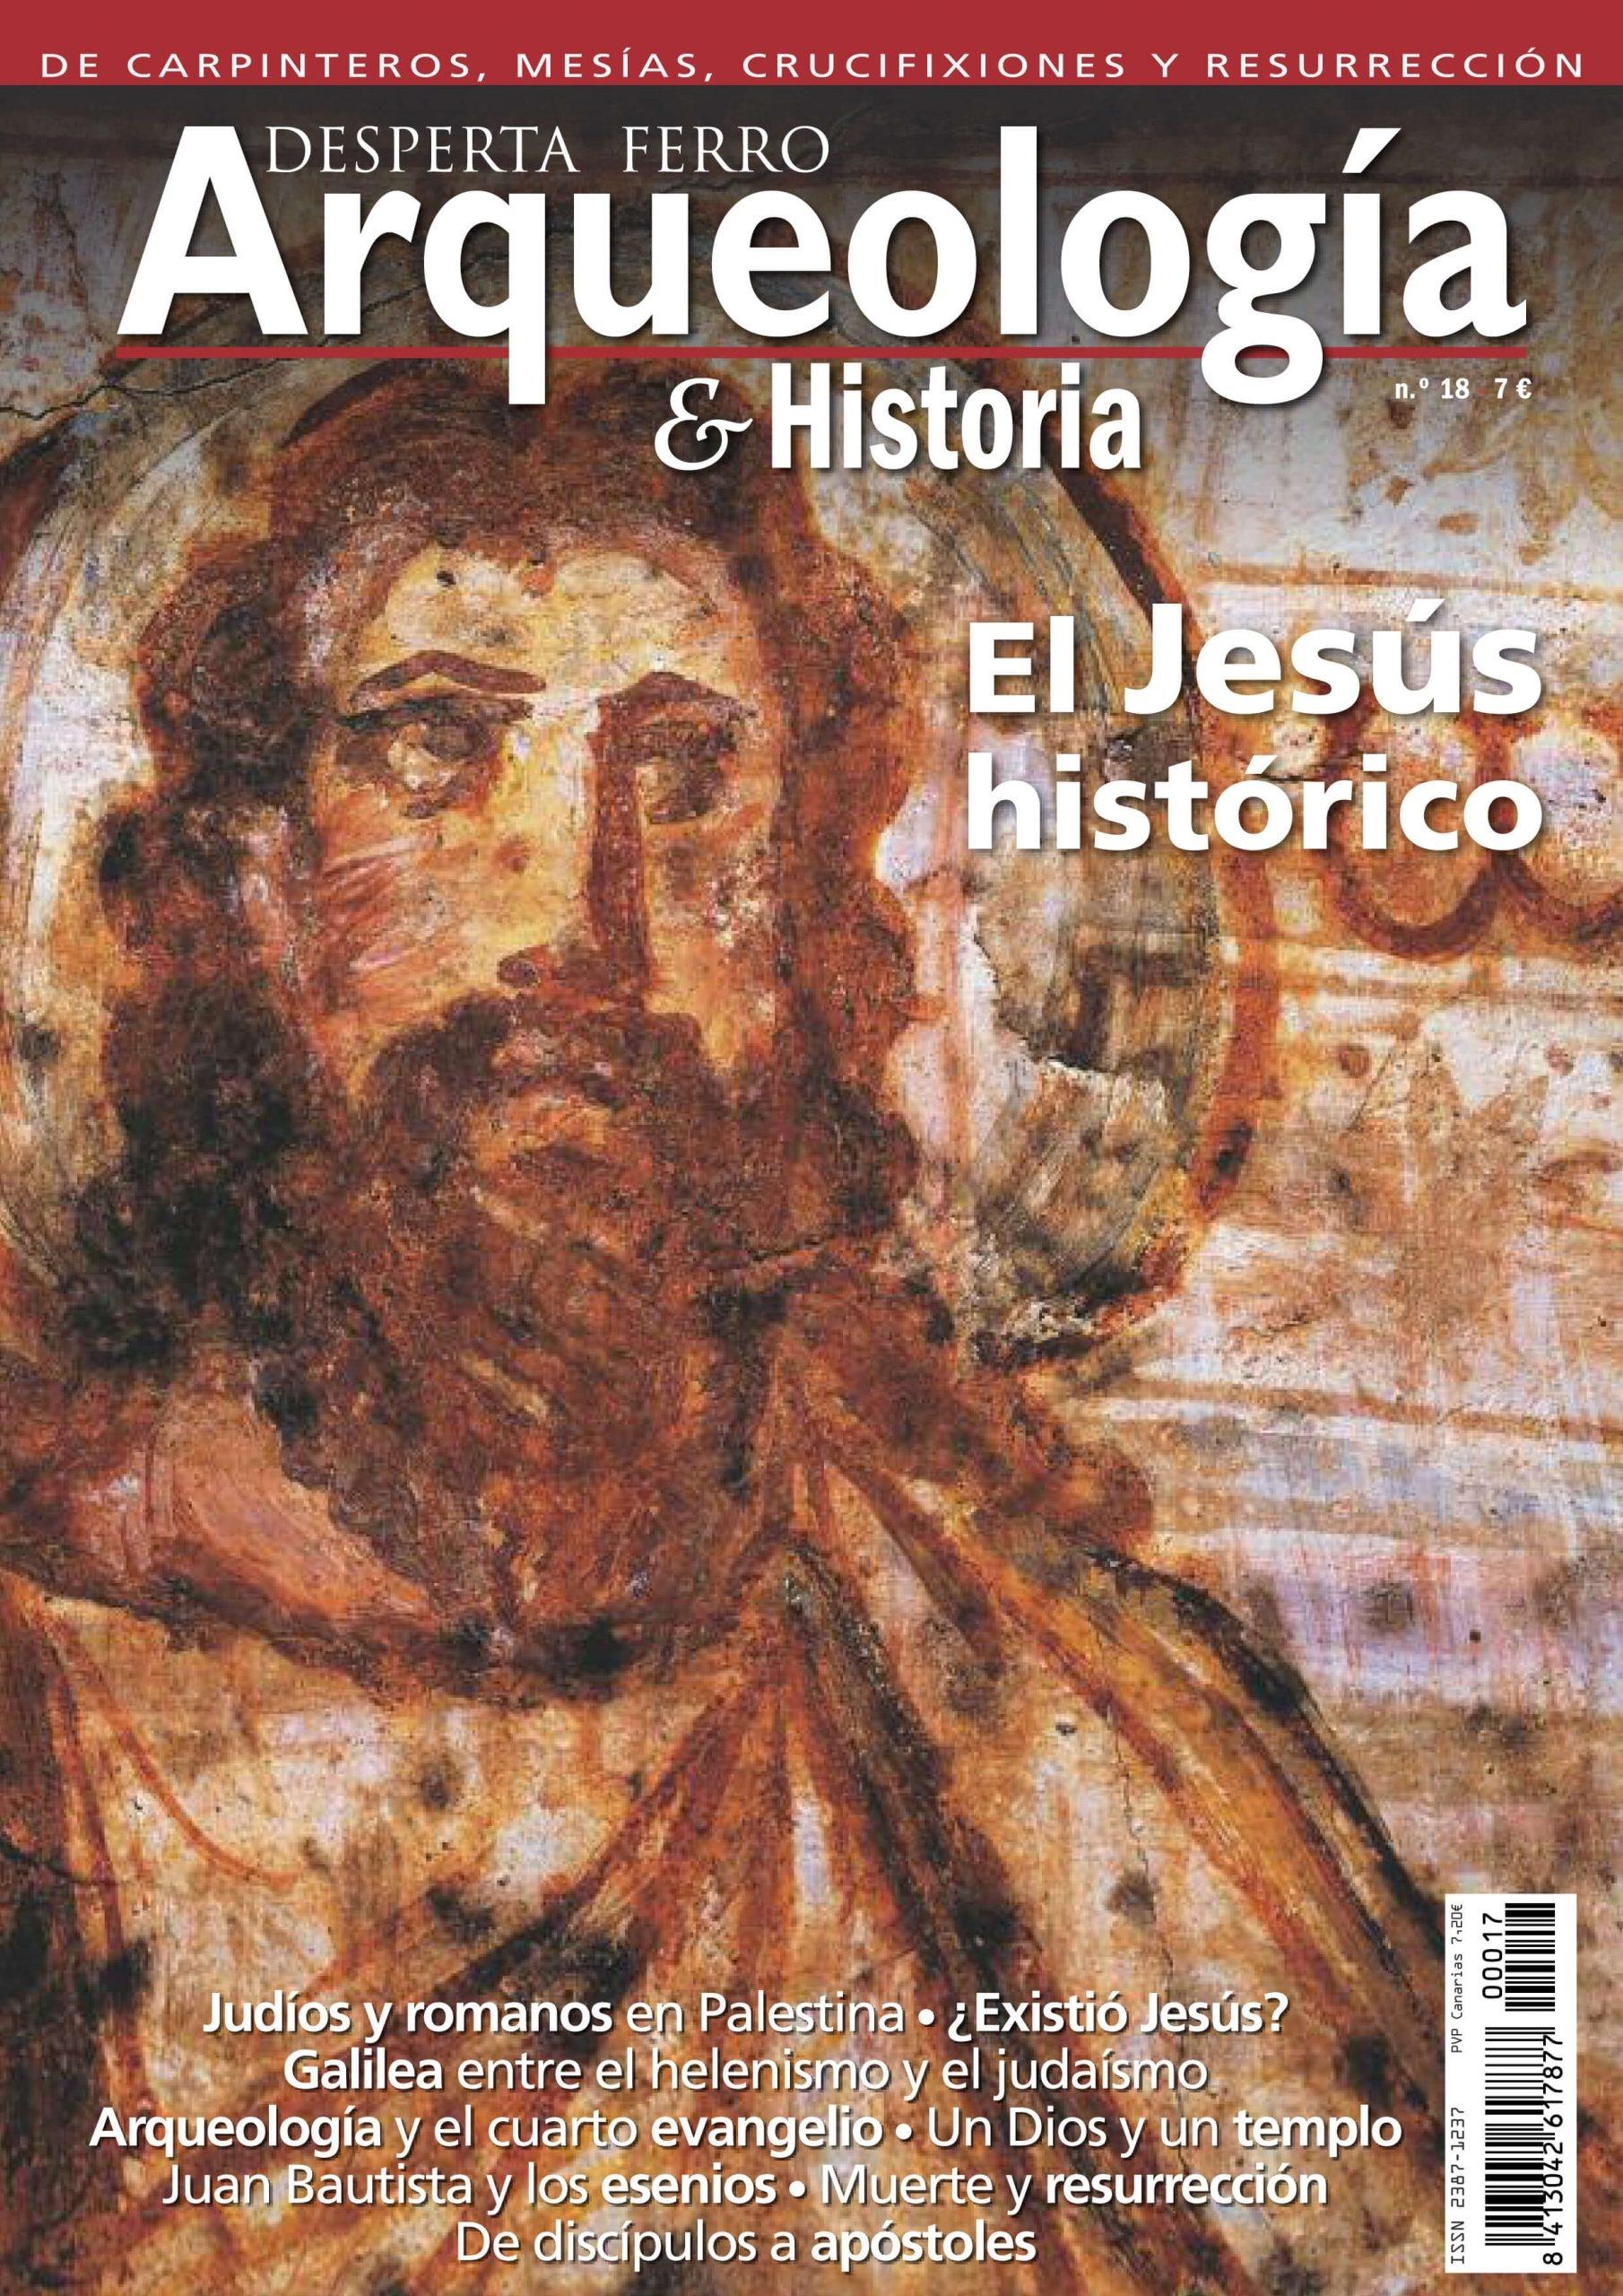 Desperta Ferro. Arqueología & Historia nº 18: El Jesús histórico